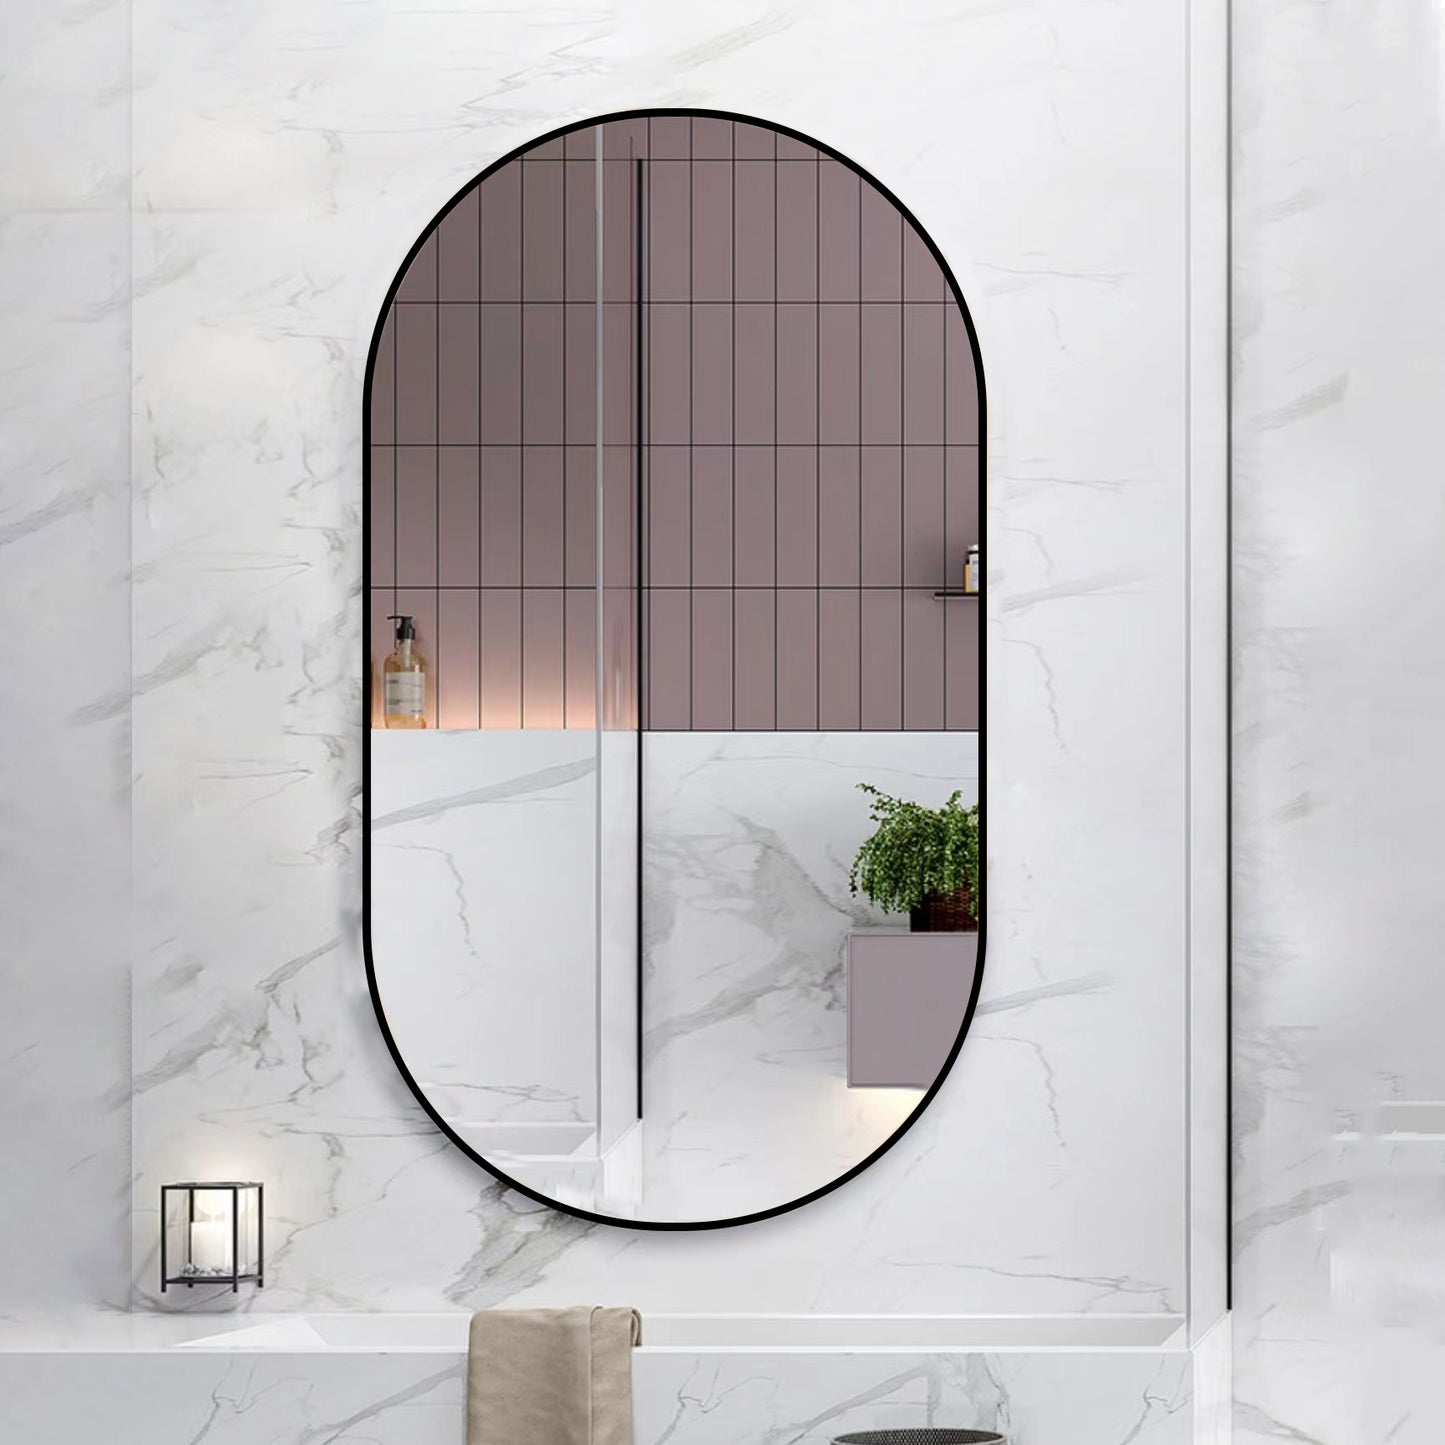 Wall Mounted Mirror, 36’’x18’’ Oval Bathroom Mirror, Black Vanity Wall Mirror w/ Stainless Steel Metal Frame & Pre-Set Hooks for Vertical & Horizontal Hang, Ideal for Bedroom, Bathroom